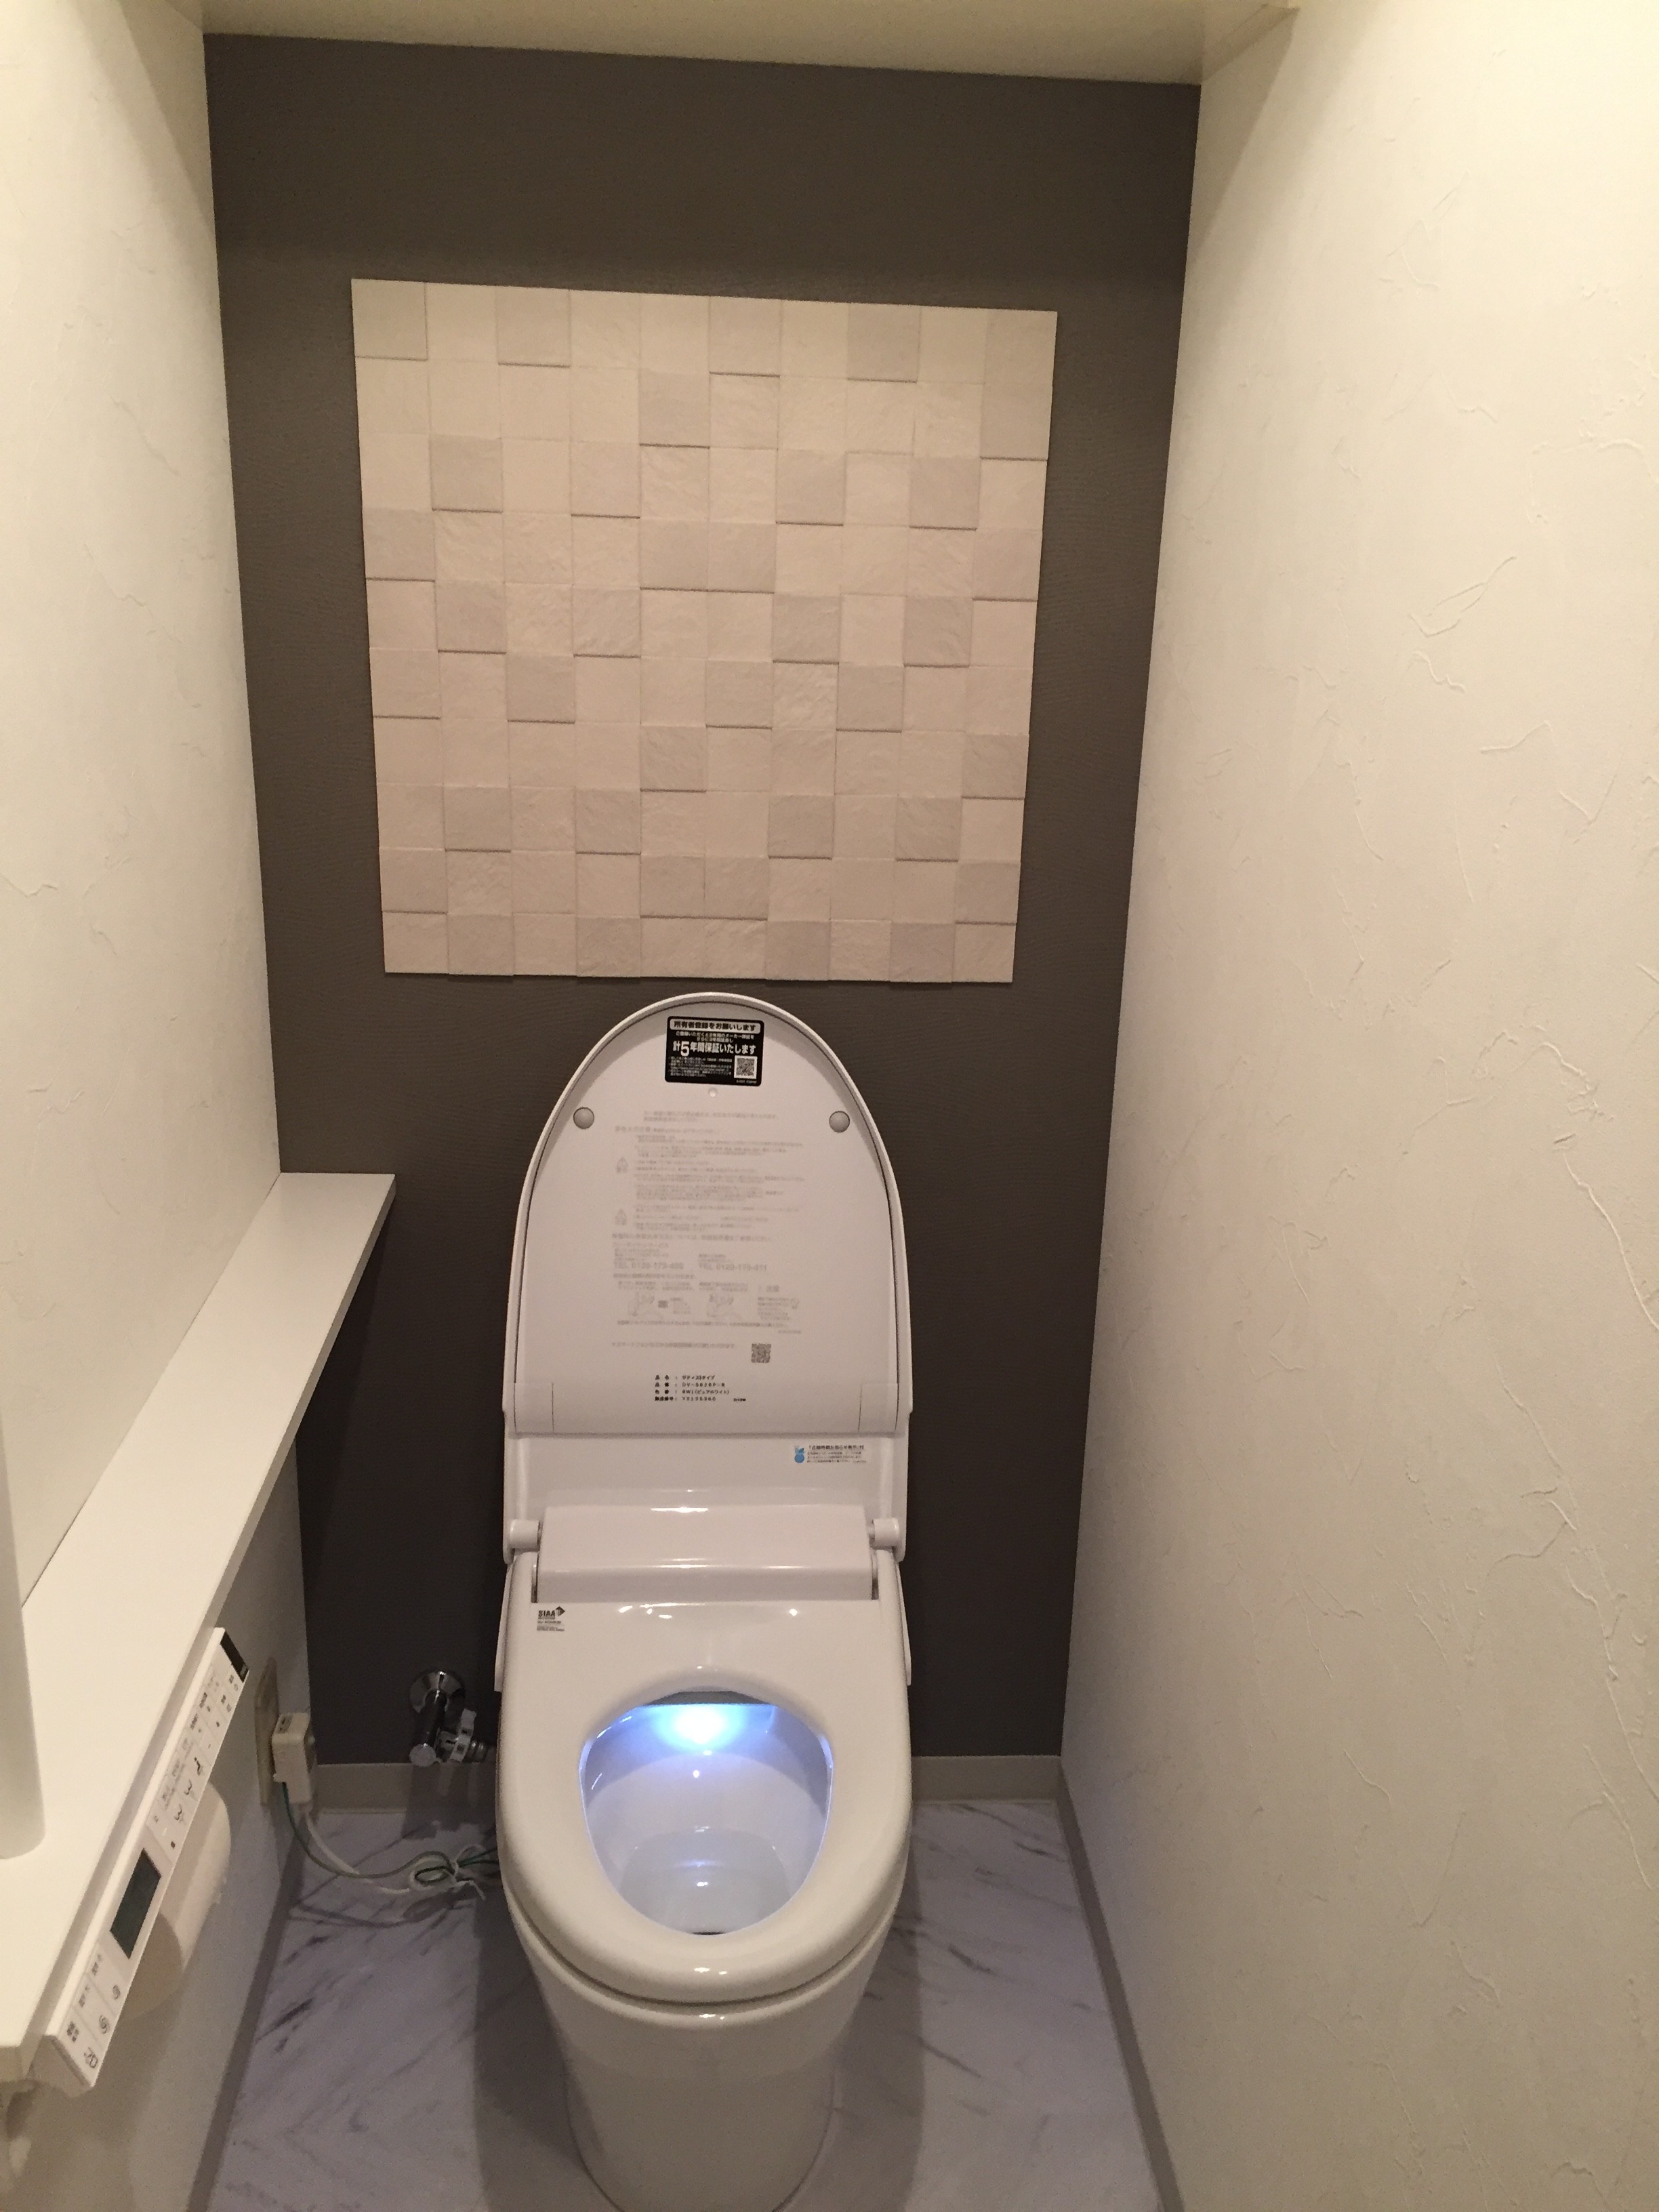 LIXILサティス トイレ交換工事 リフォームのキューブリノベーション